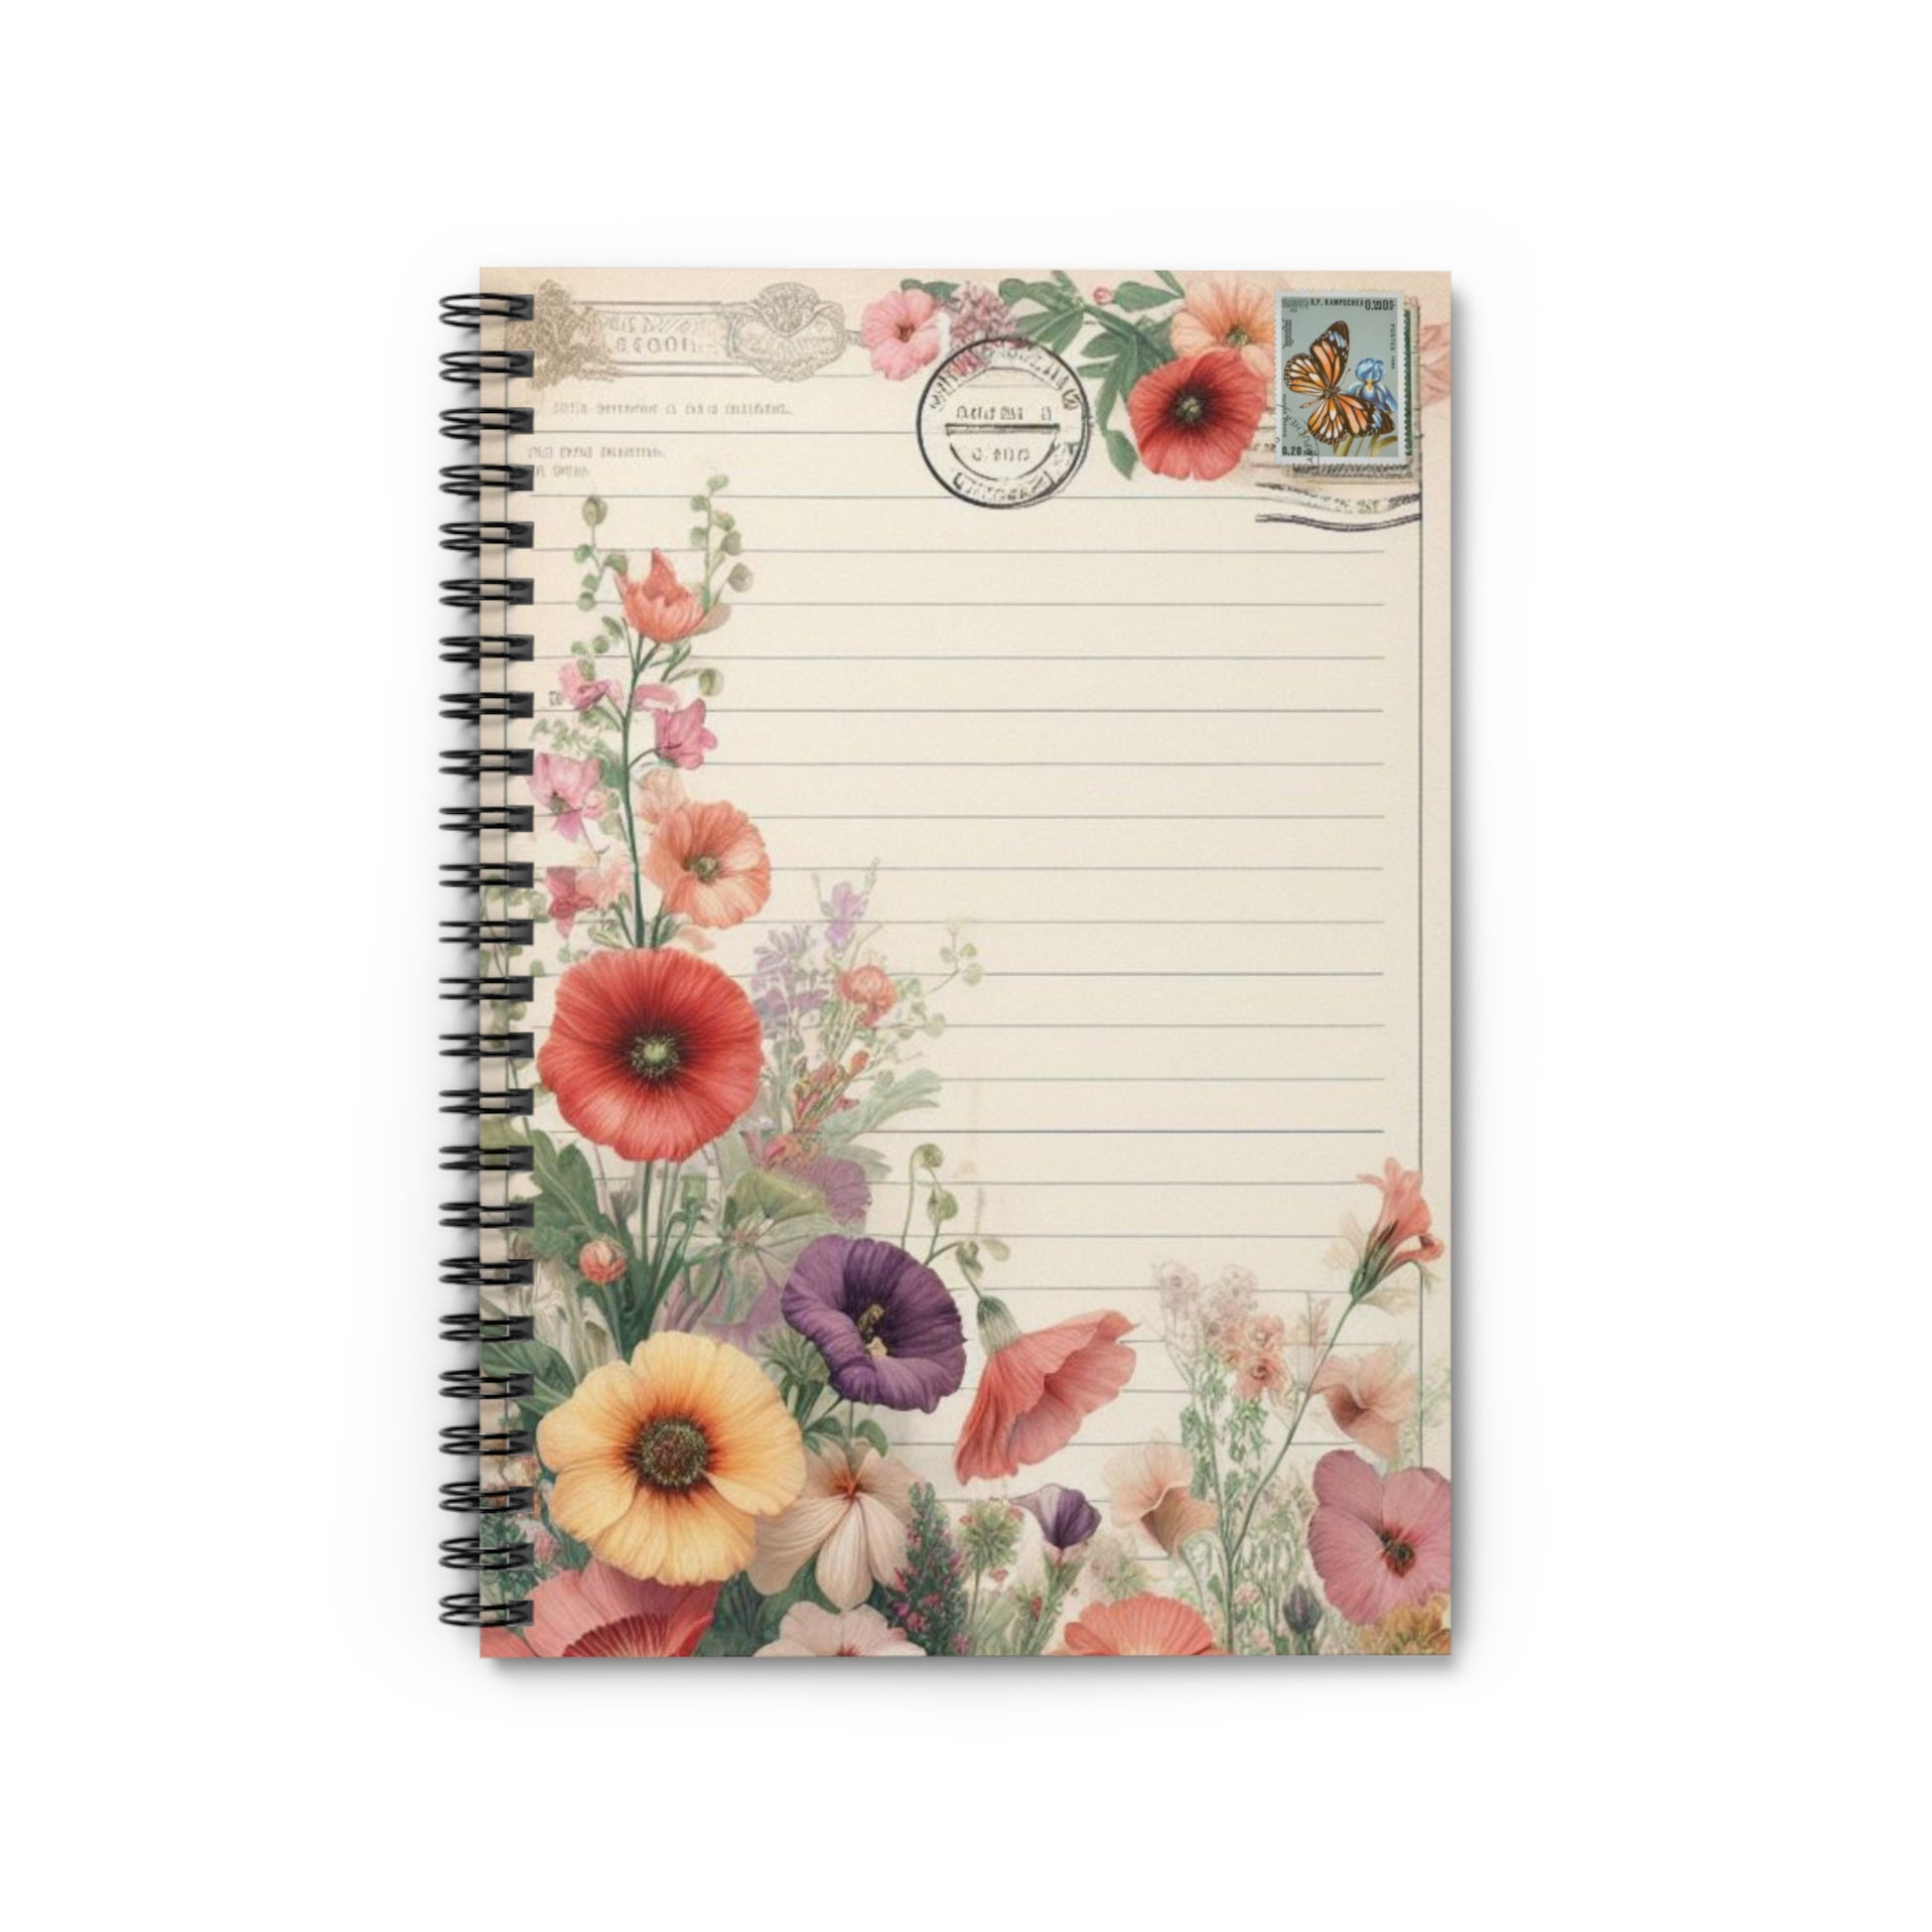 Ephemera Flowers Vintage Note Paper Spiral Notebook Ruled Line Journal